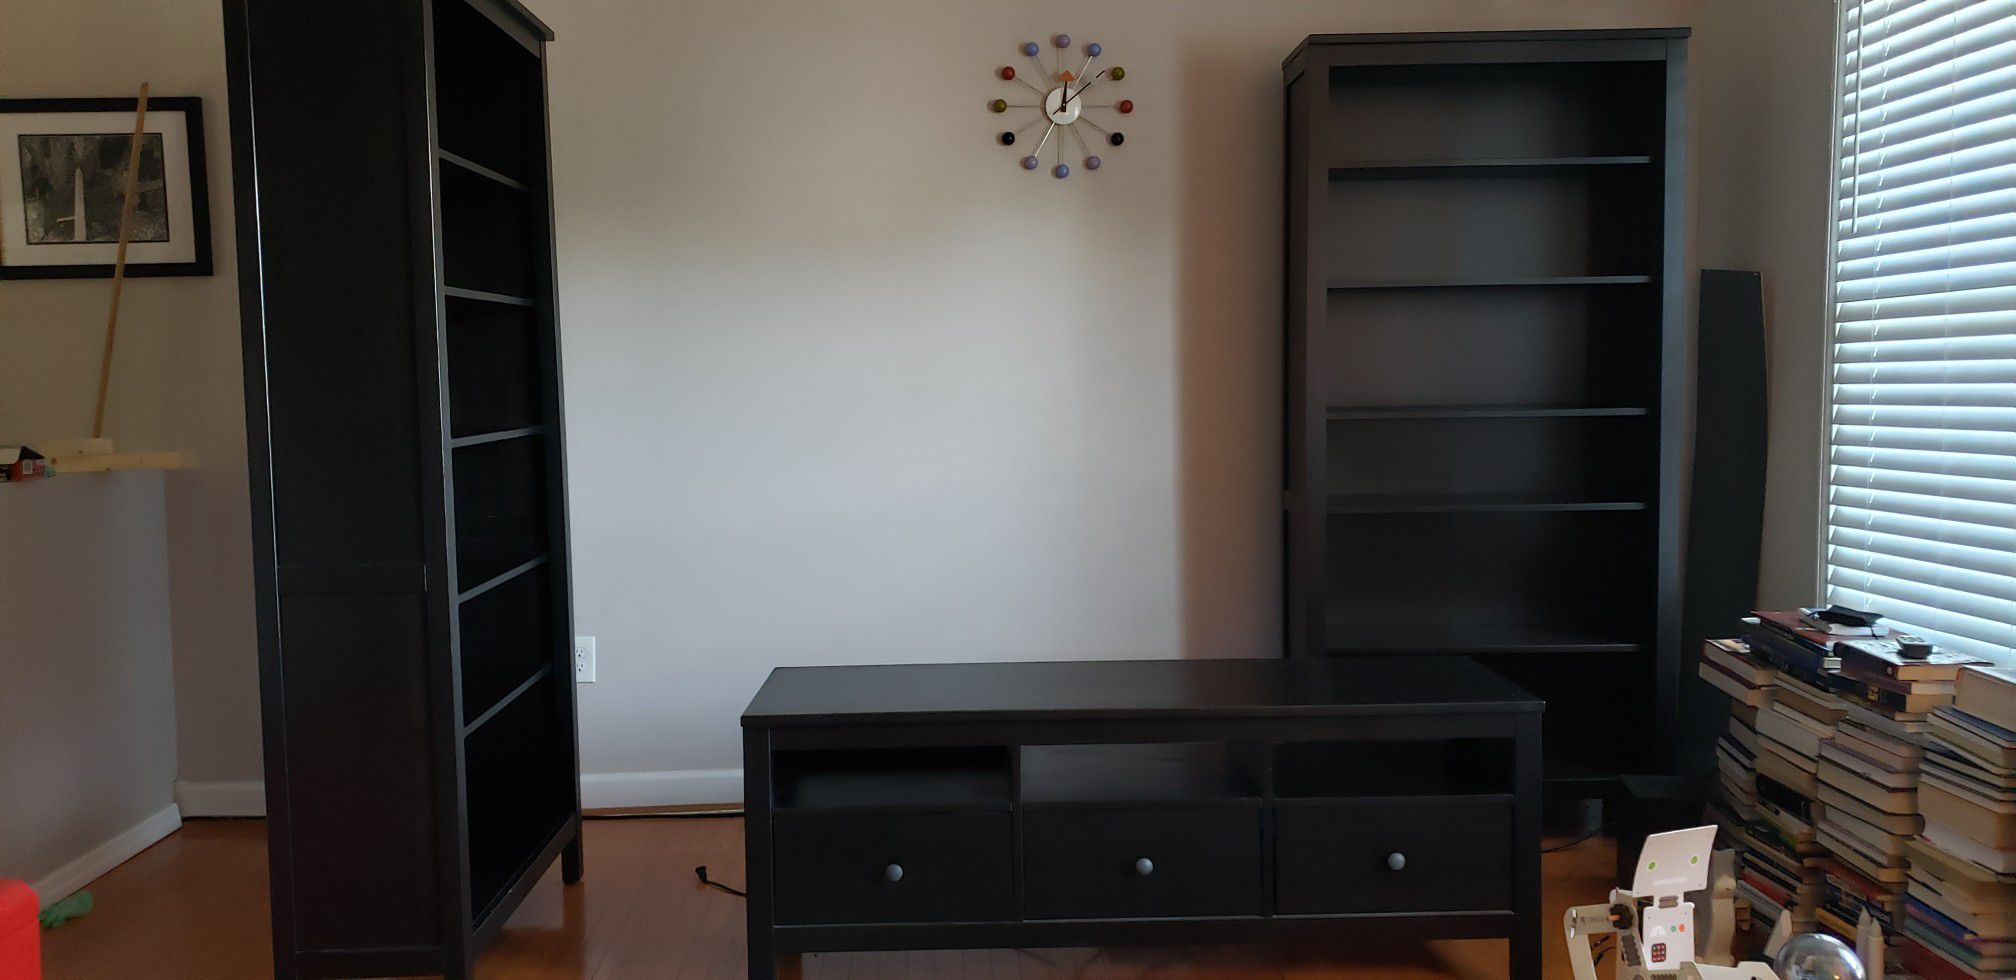 Hemnes Ikea Furniture Set (includes 2 bookcases and TV unit)